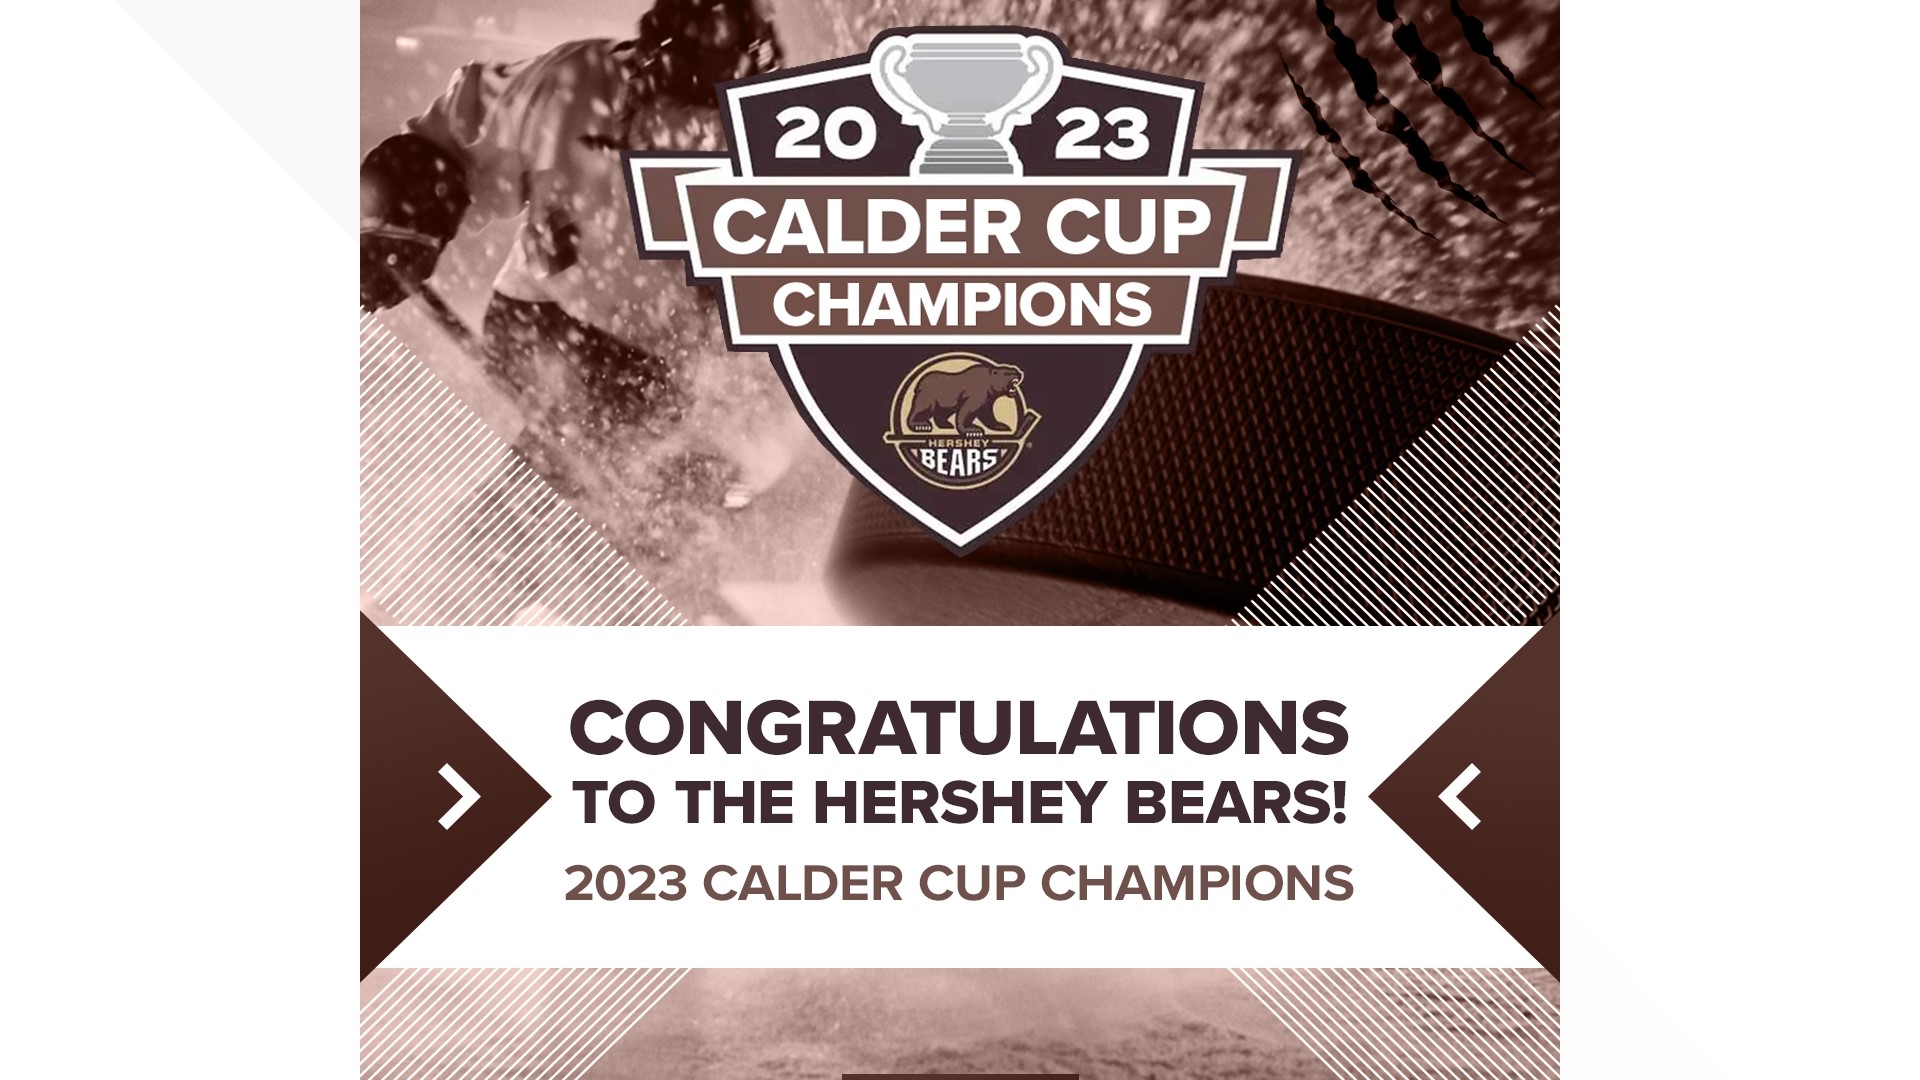 Hershey Bears celebrate winning Calder Cup at GIANT Center fox43